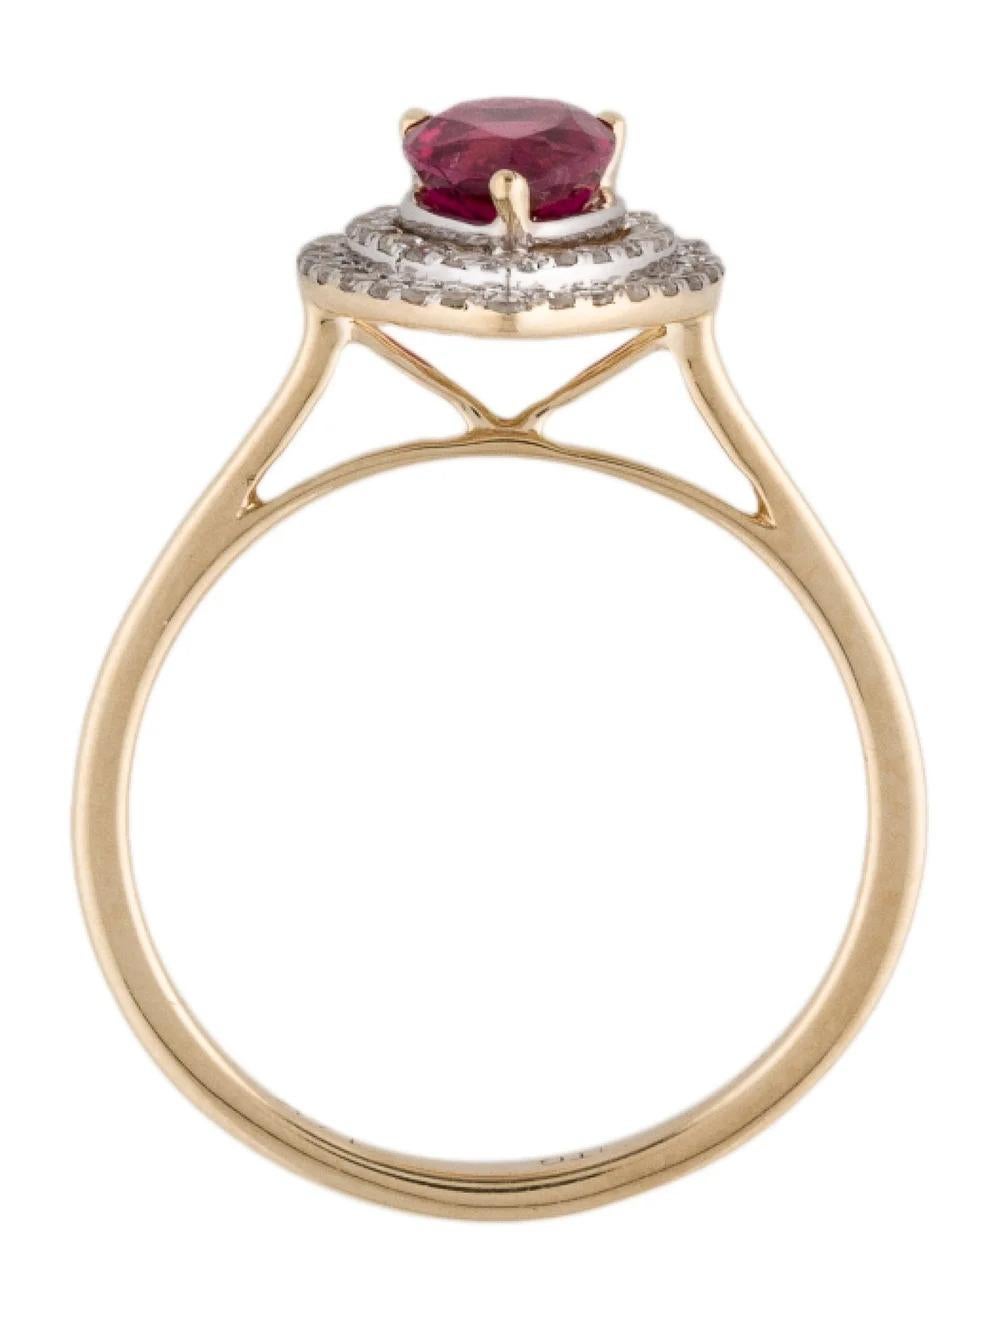 Women's 14K Tourmaline & Diamond Cocktail Ring Size 6.25 - Stunning Statement Jewelry For Sale